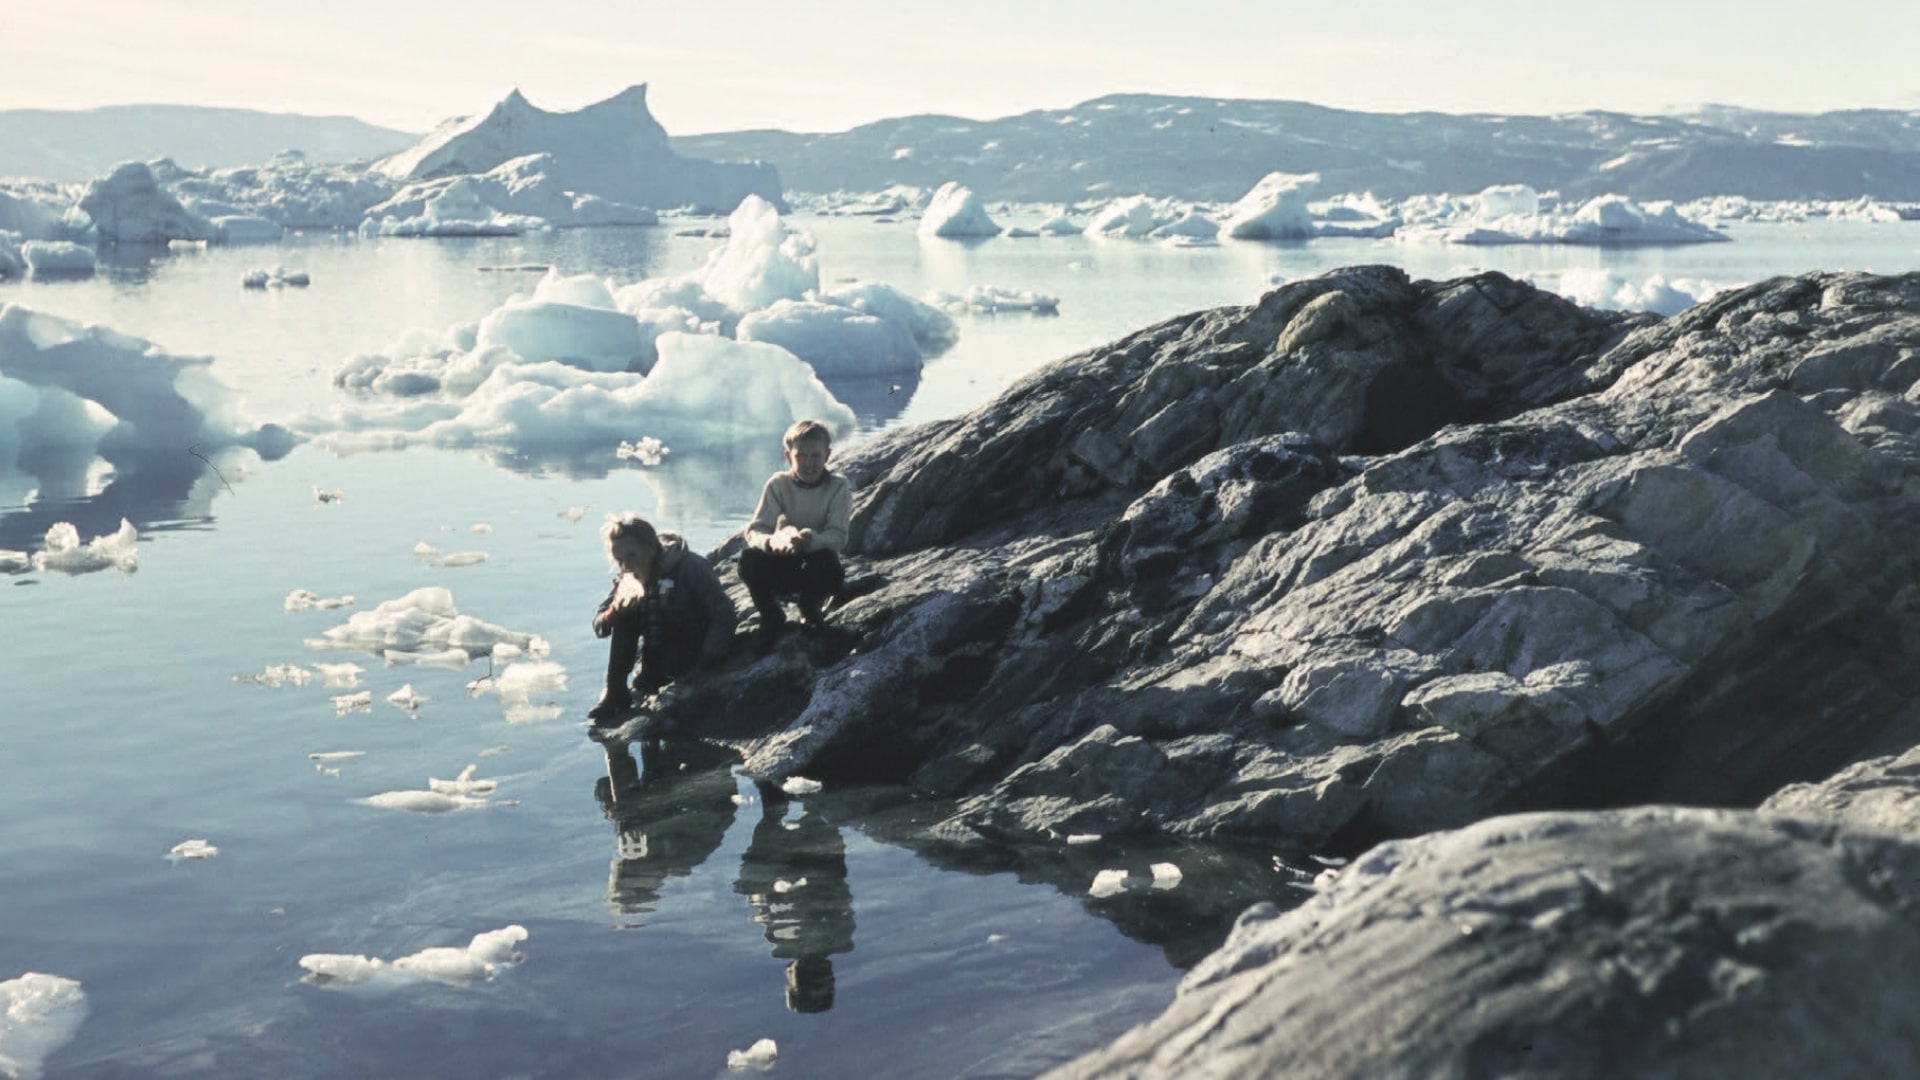 Hvor jeg var barn var der isbjørne, Anne Knudsen, Grønland